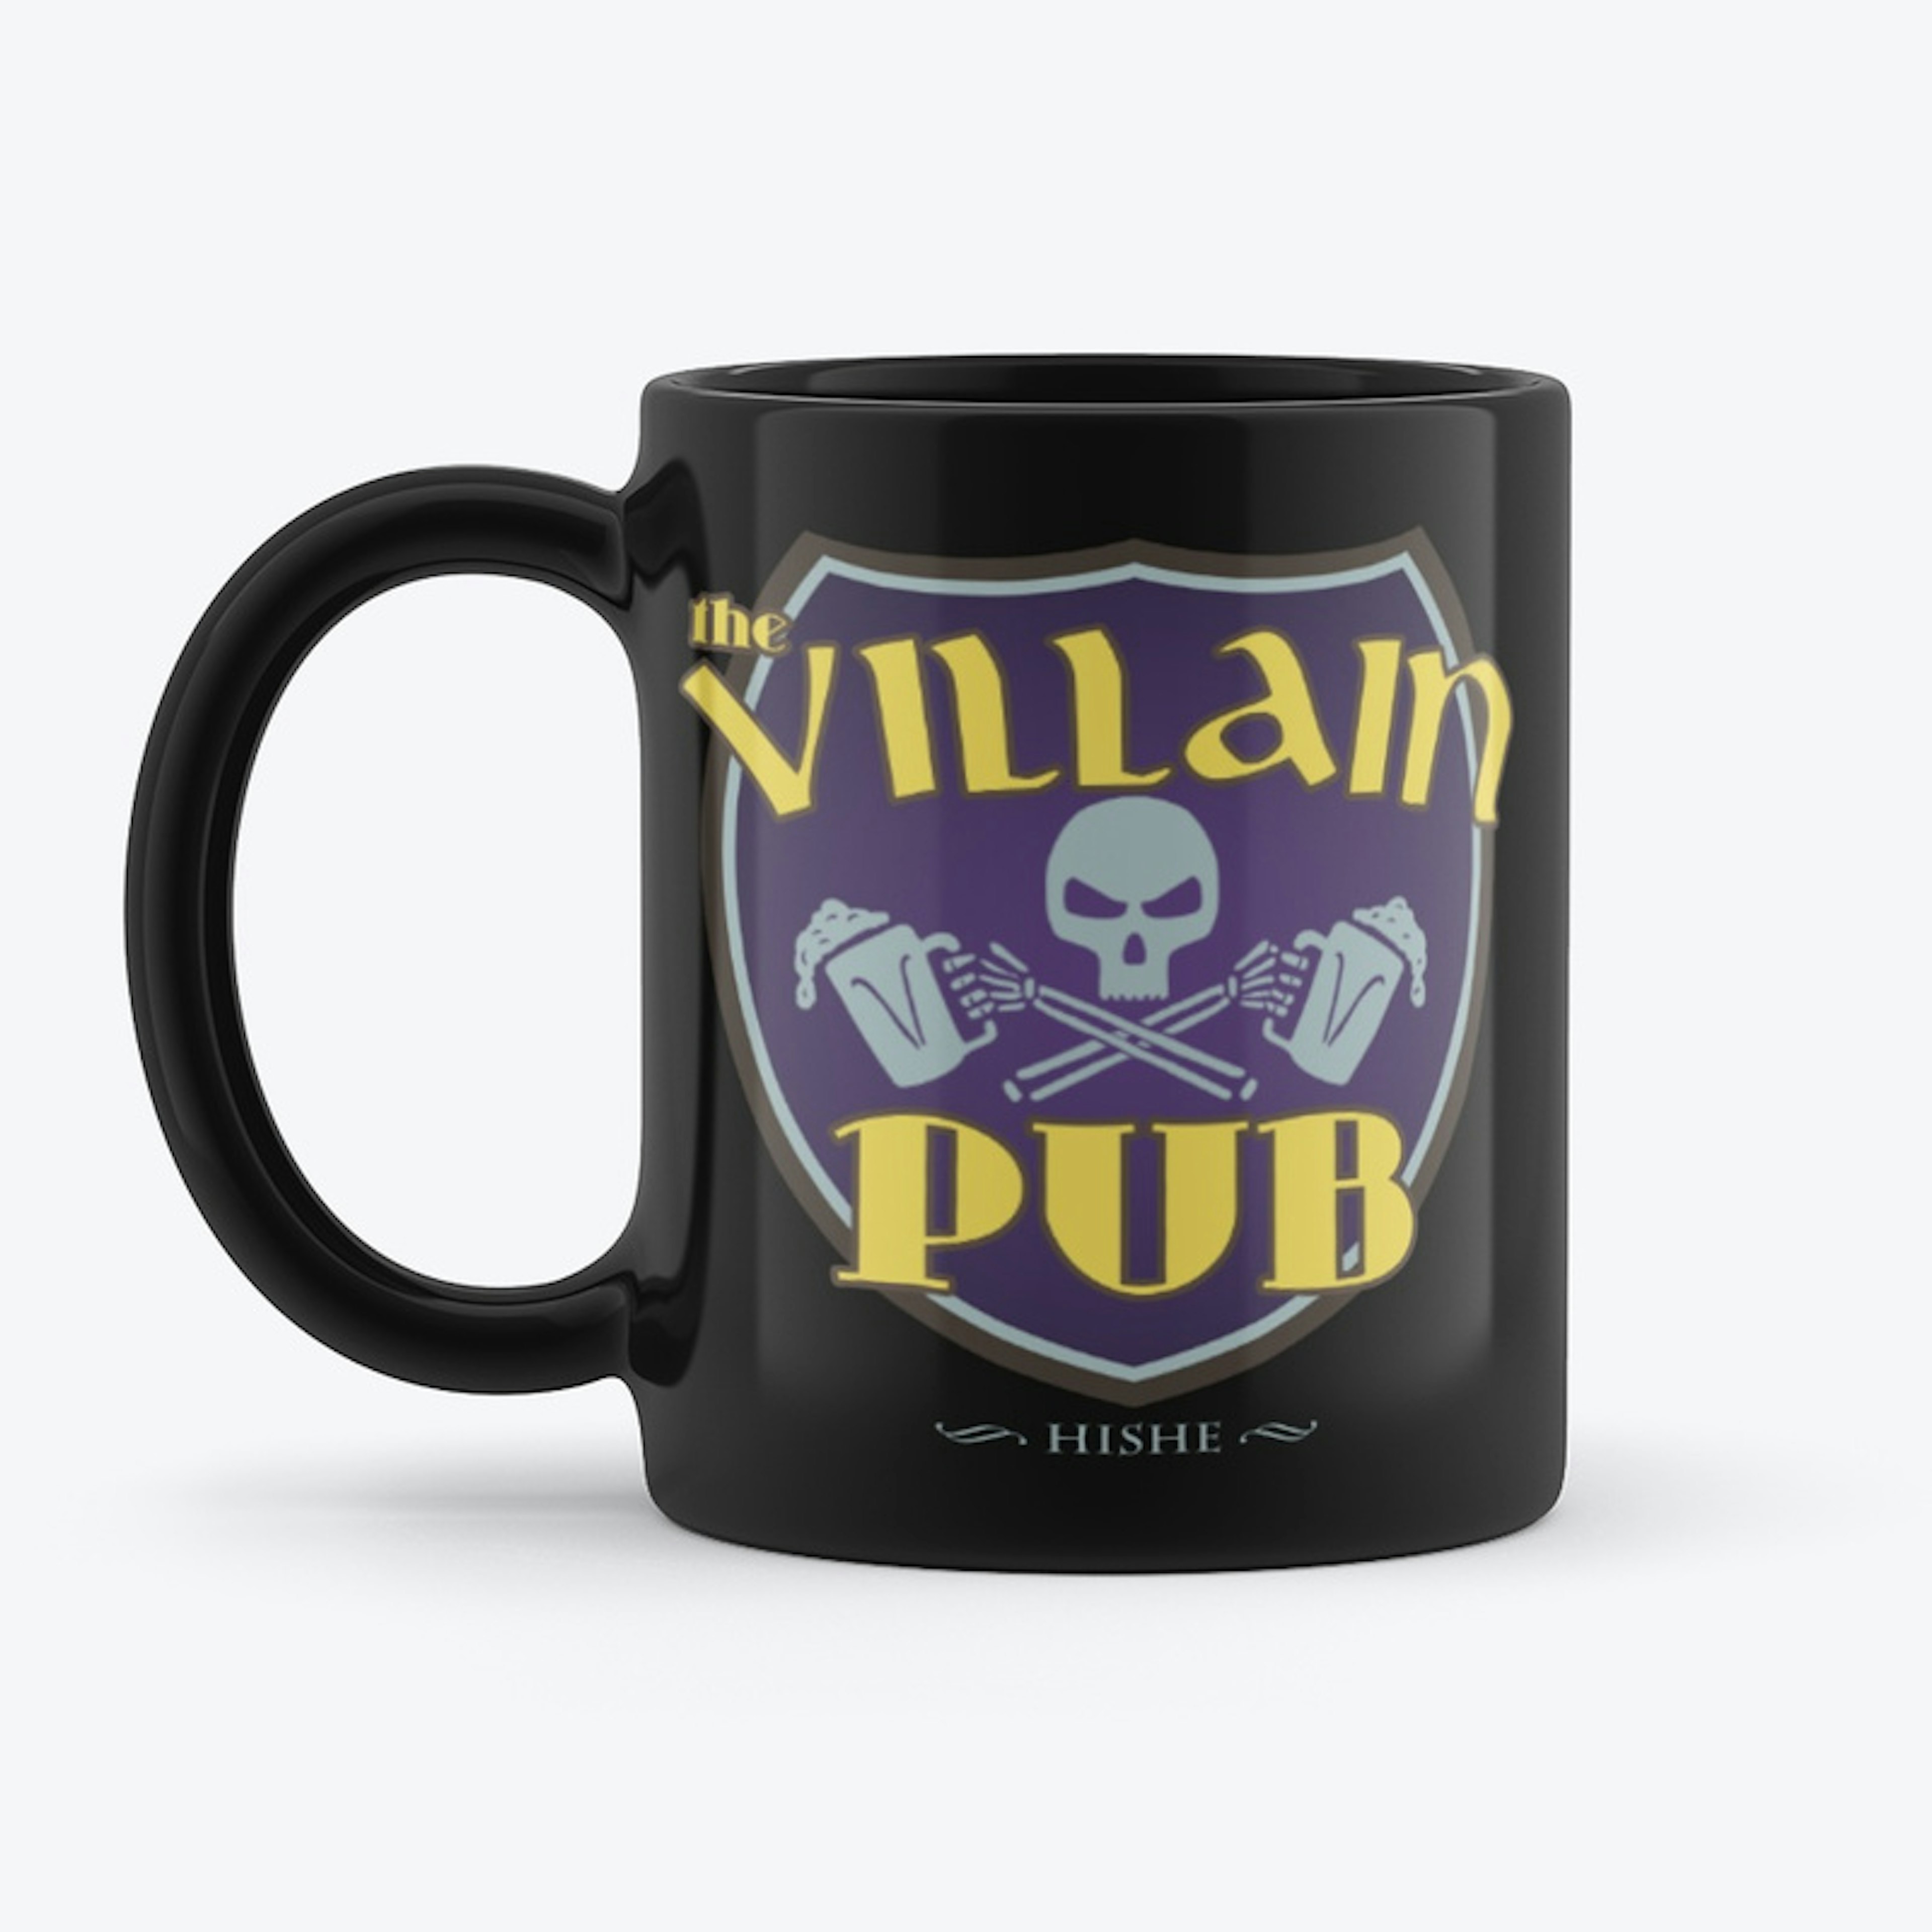 Villain Pub Emblem